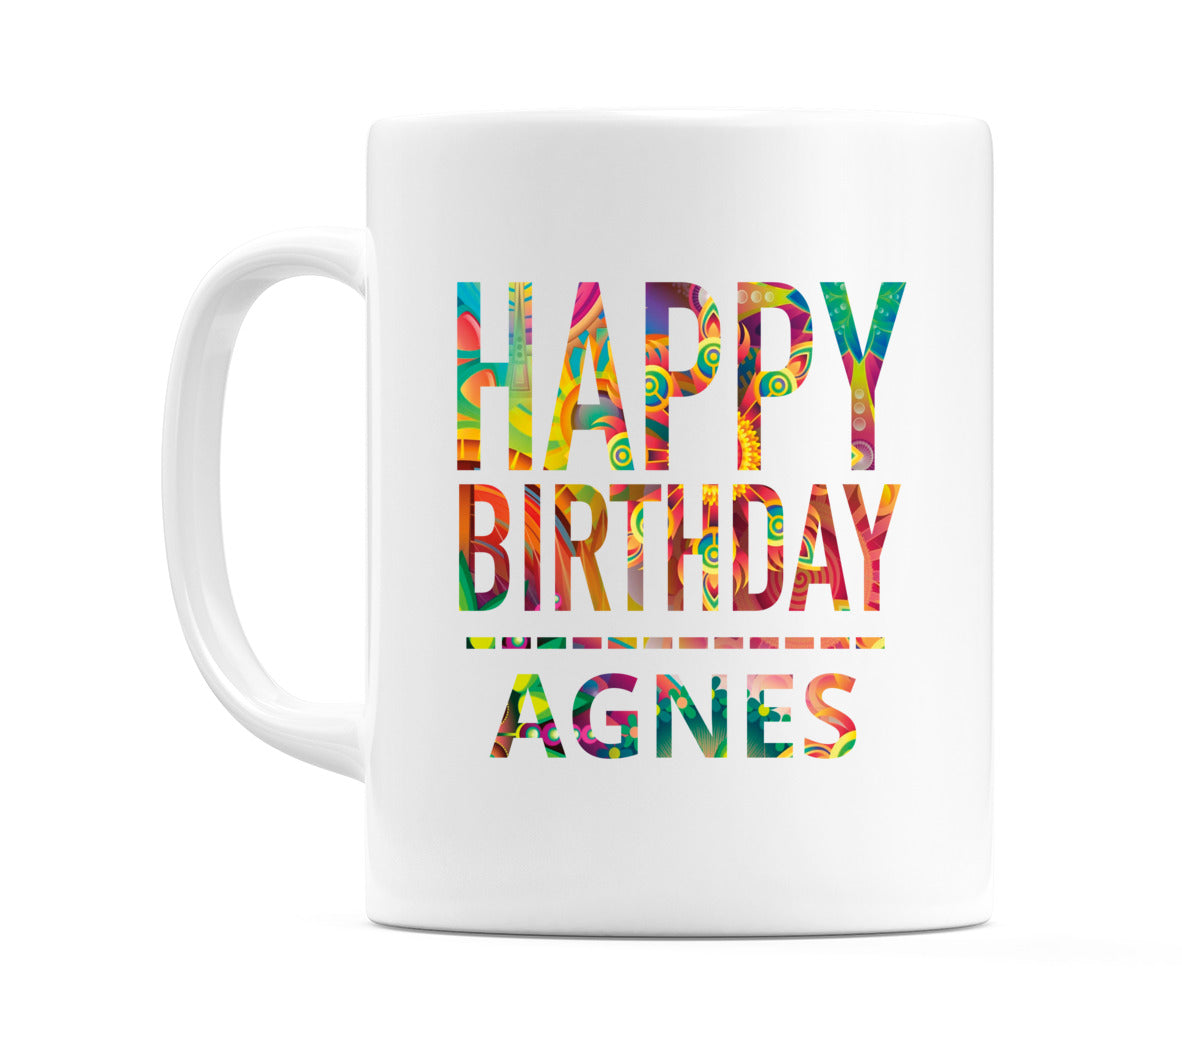 Happy Birthday Agnes (Tie Dye Effect) Mug Cup by WeDoMugs